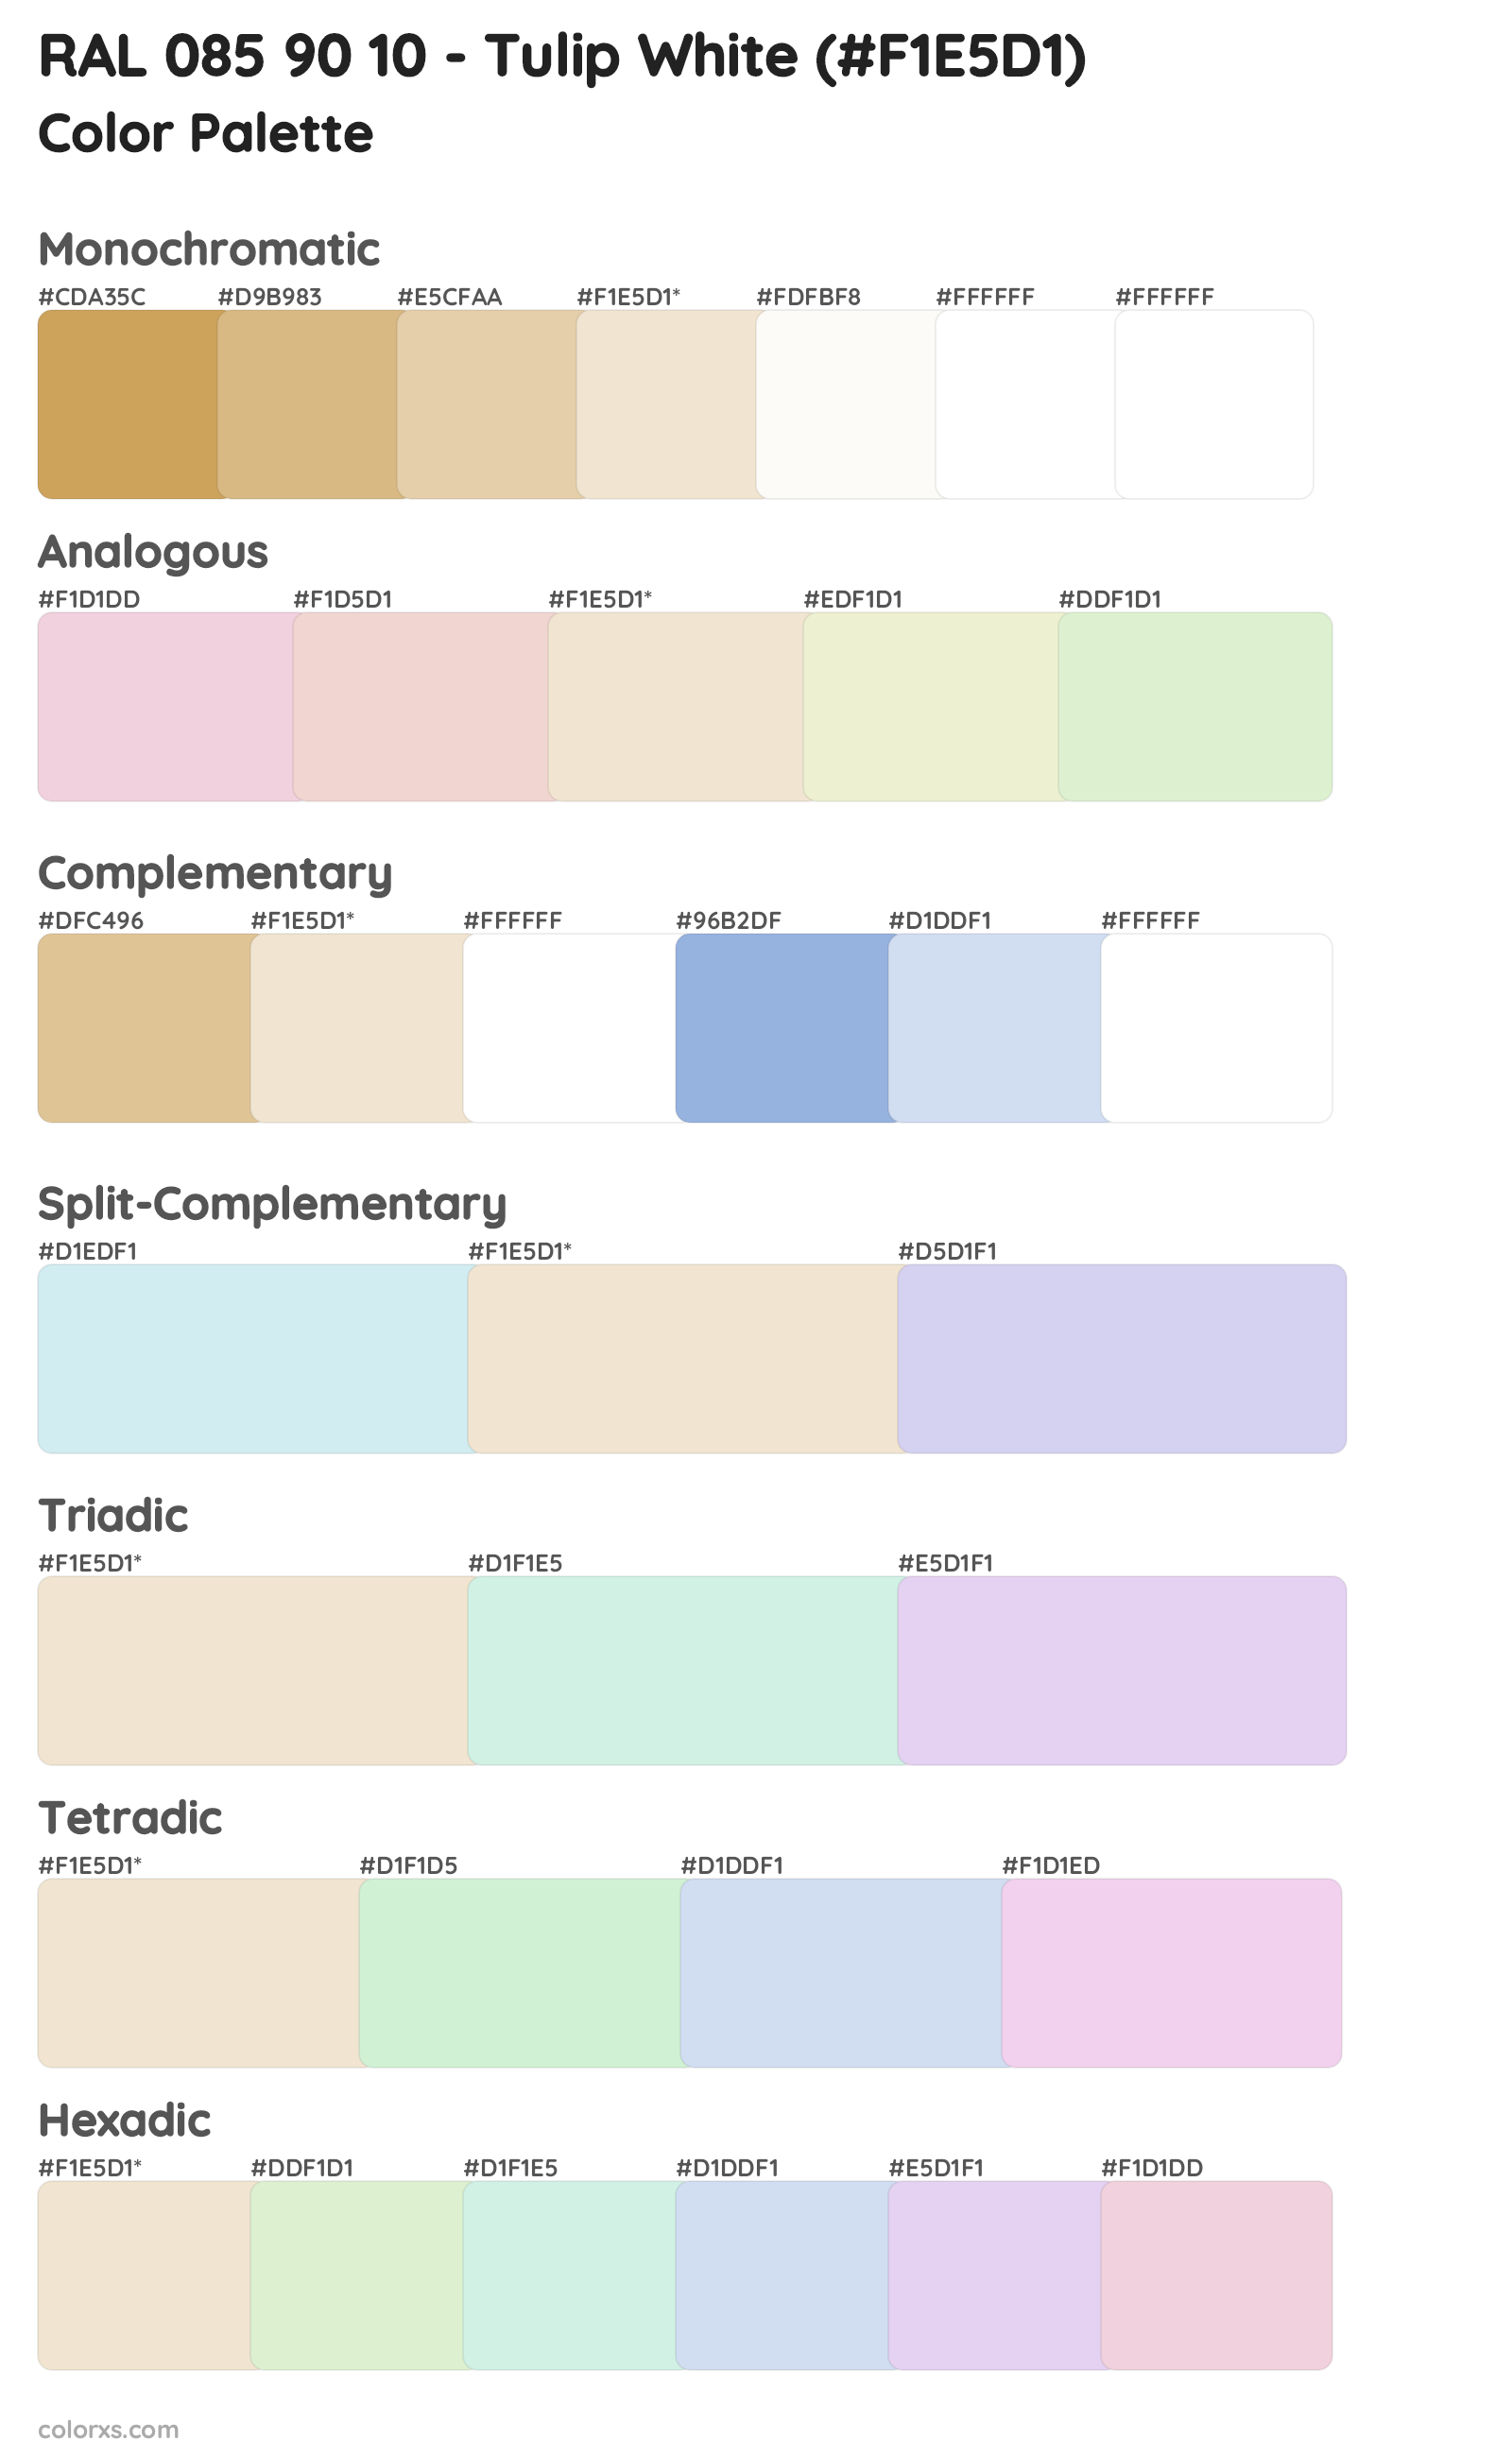 RAL 085 90 10 - Tulip White Color Scheme Palettes